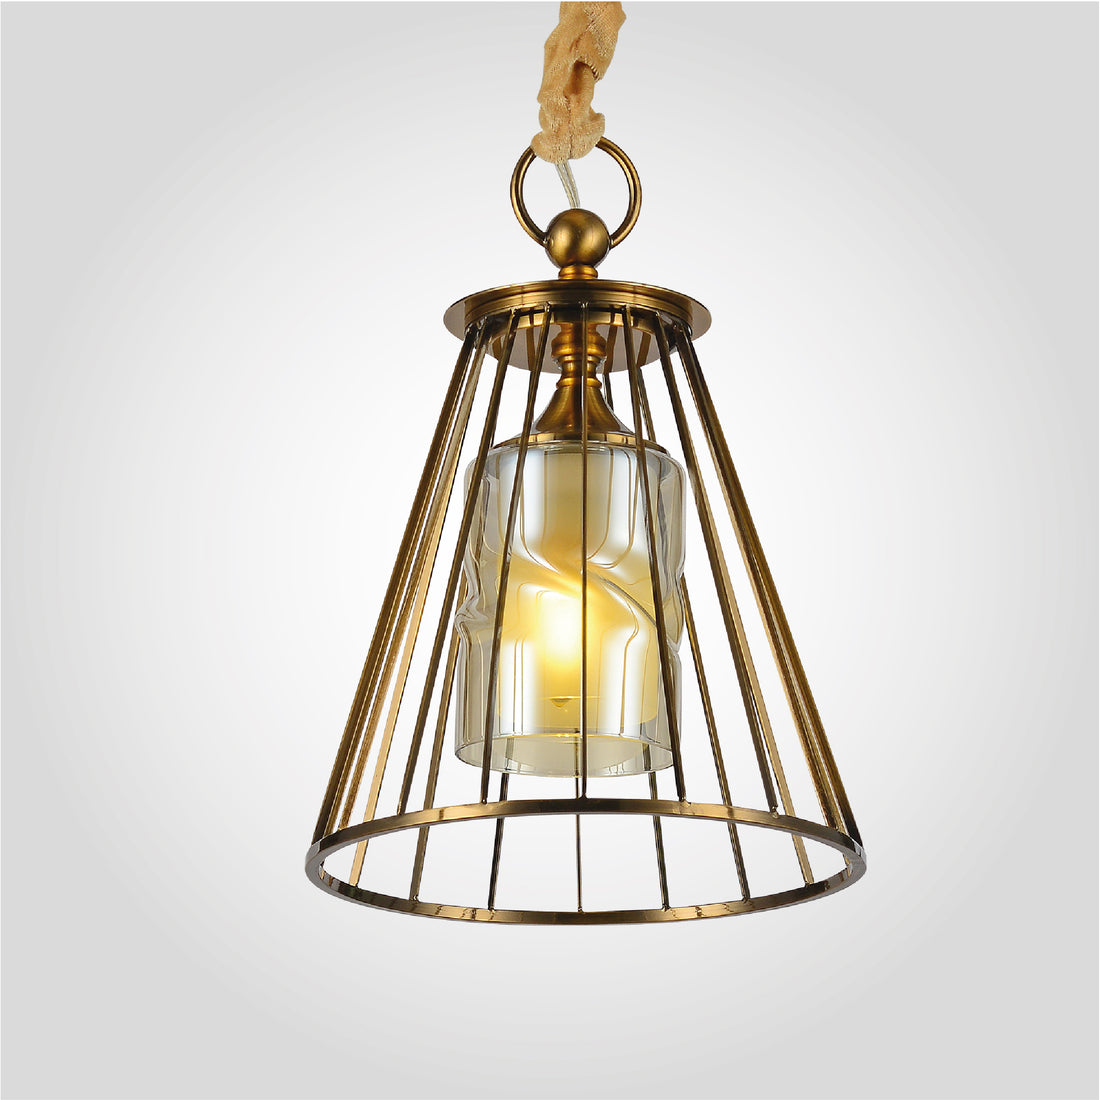 Vintage Industrial Cage Hanging Lamp